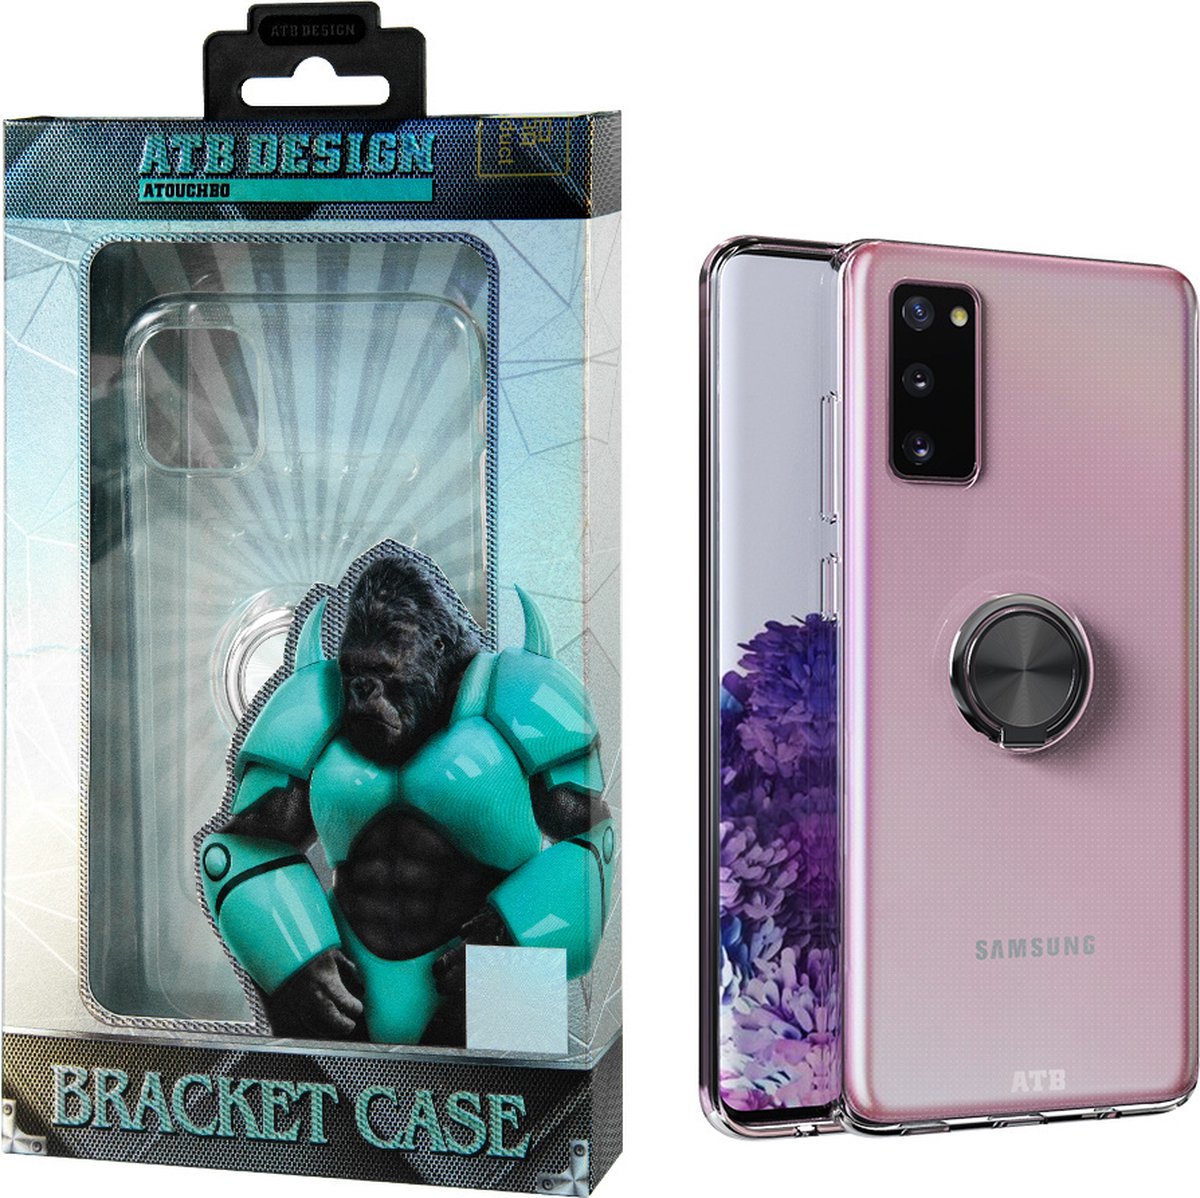 Atouchbo Bracket Case Samsung S20 Plus hoesje transparant